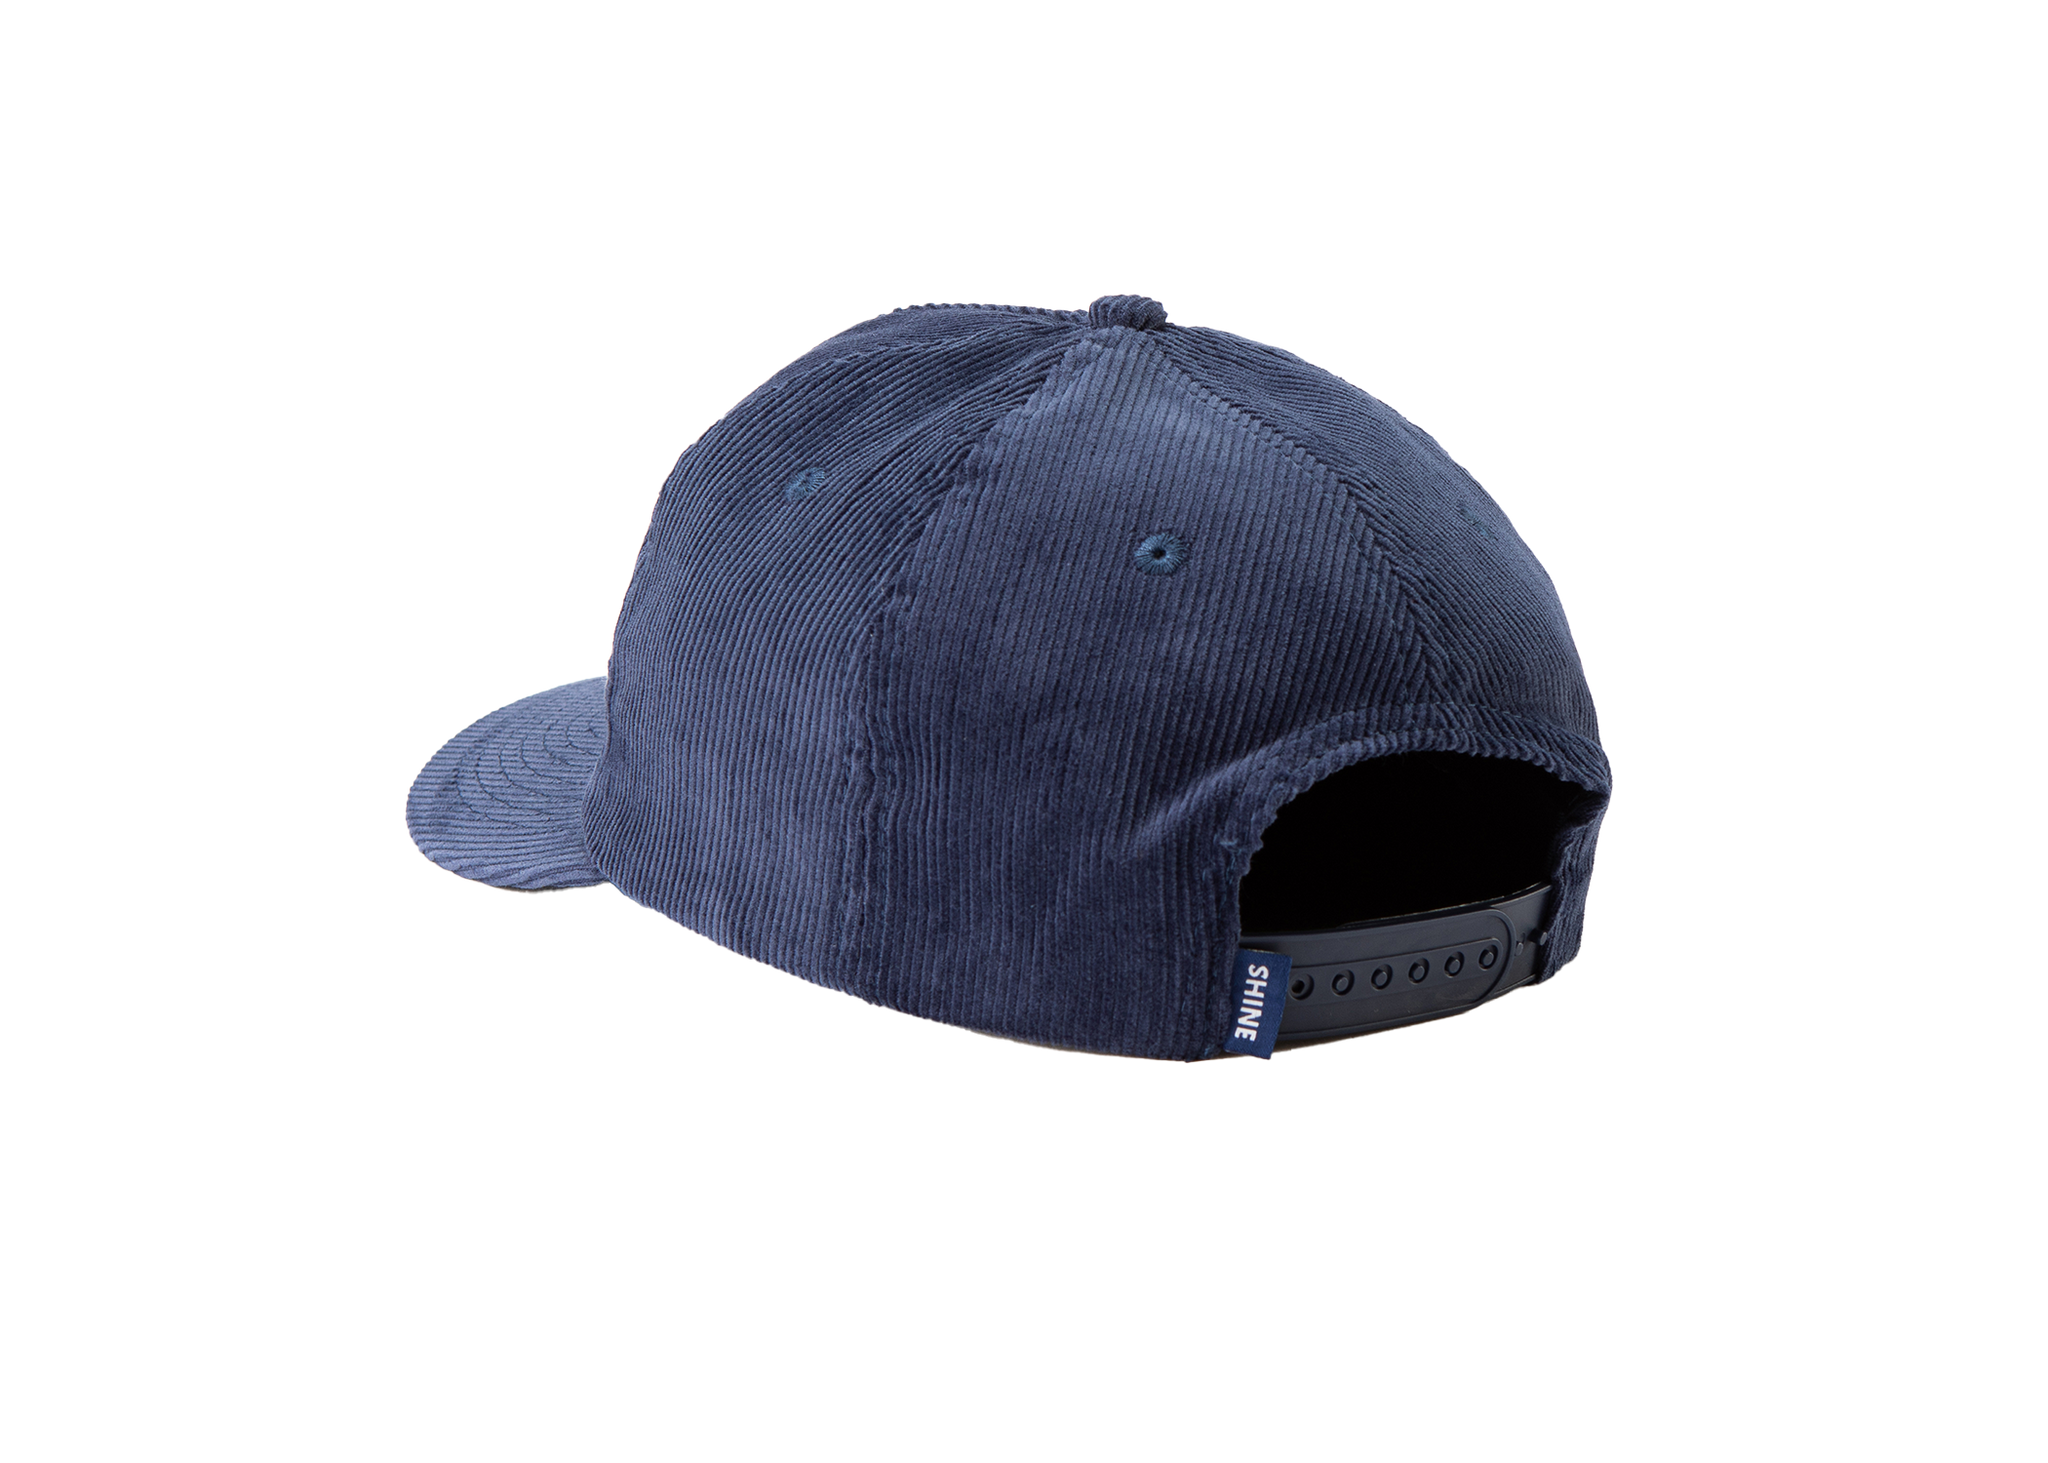 BLUE CORDUROY HAT WITH CURSIVE LOGO BACK VIEW